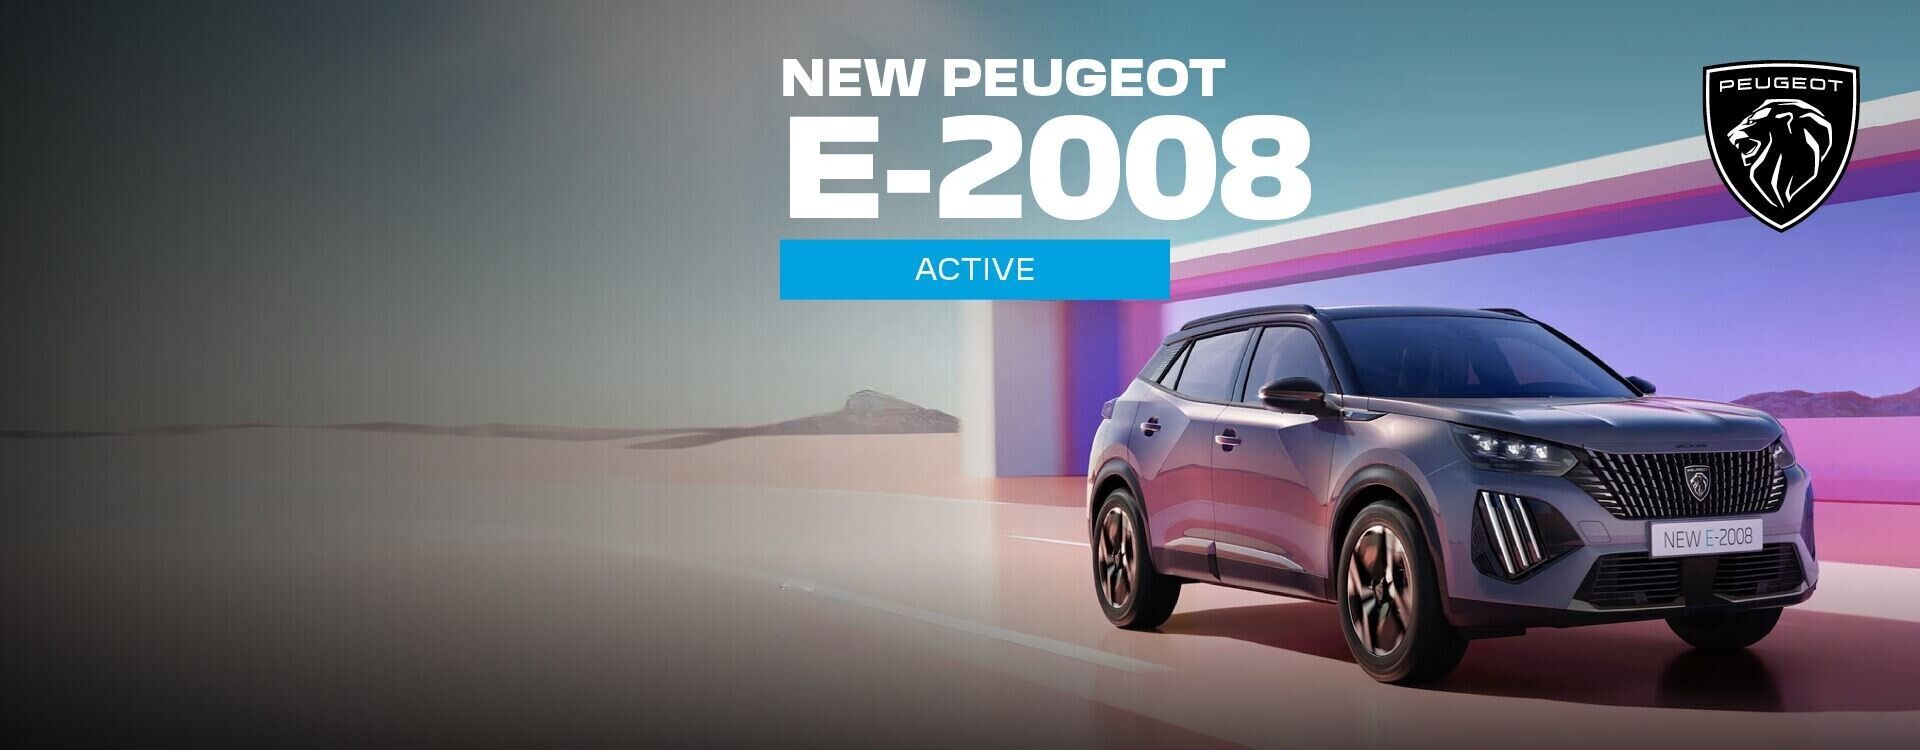 Peugeot Hero Image